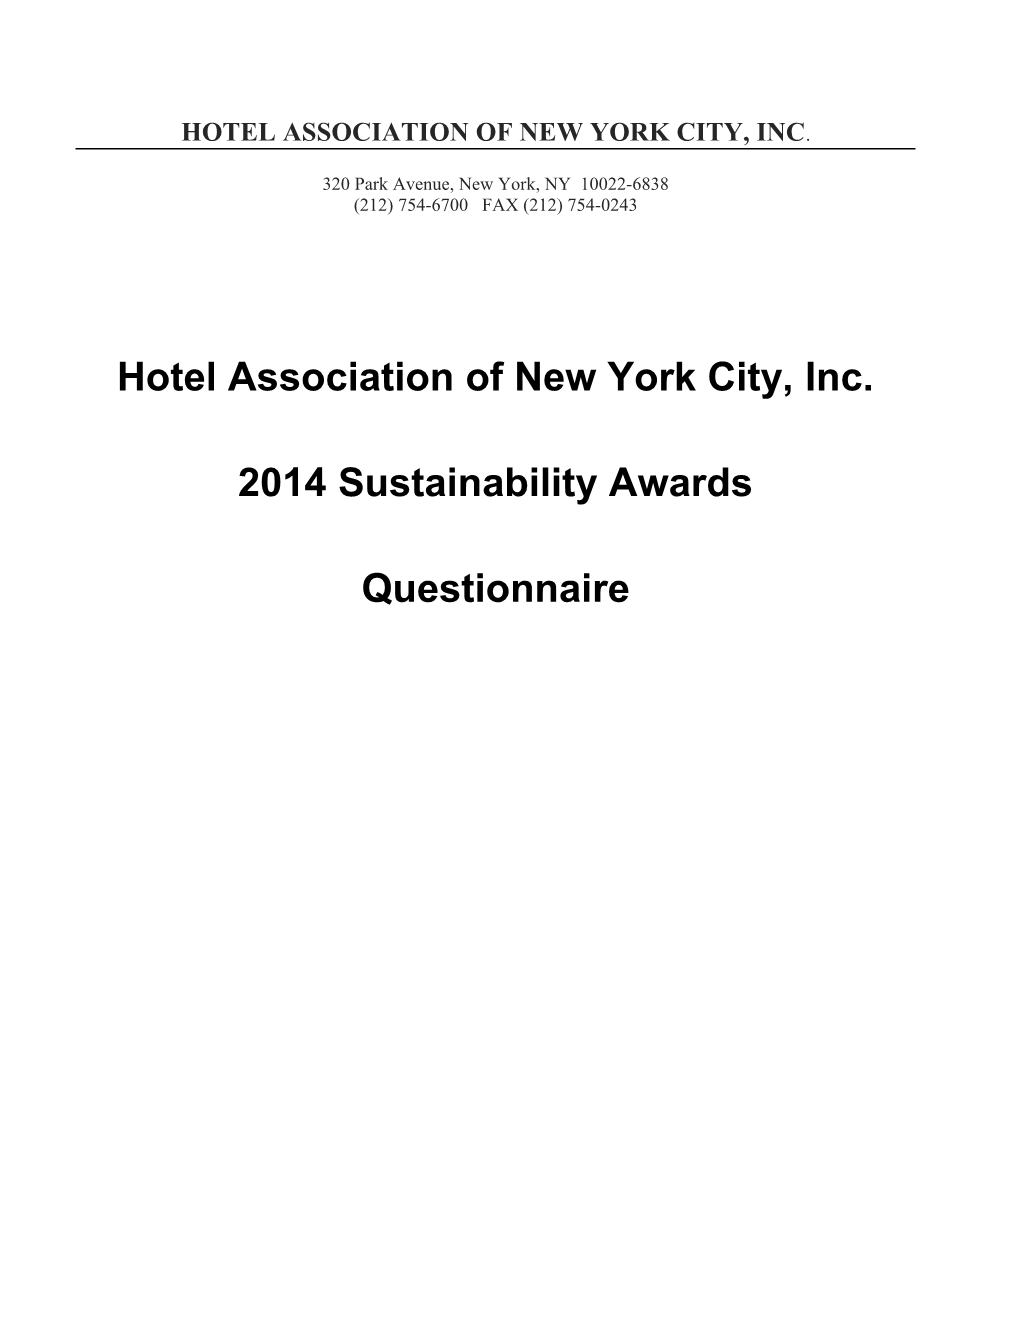 Hotel Association of New York City, Inc